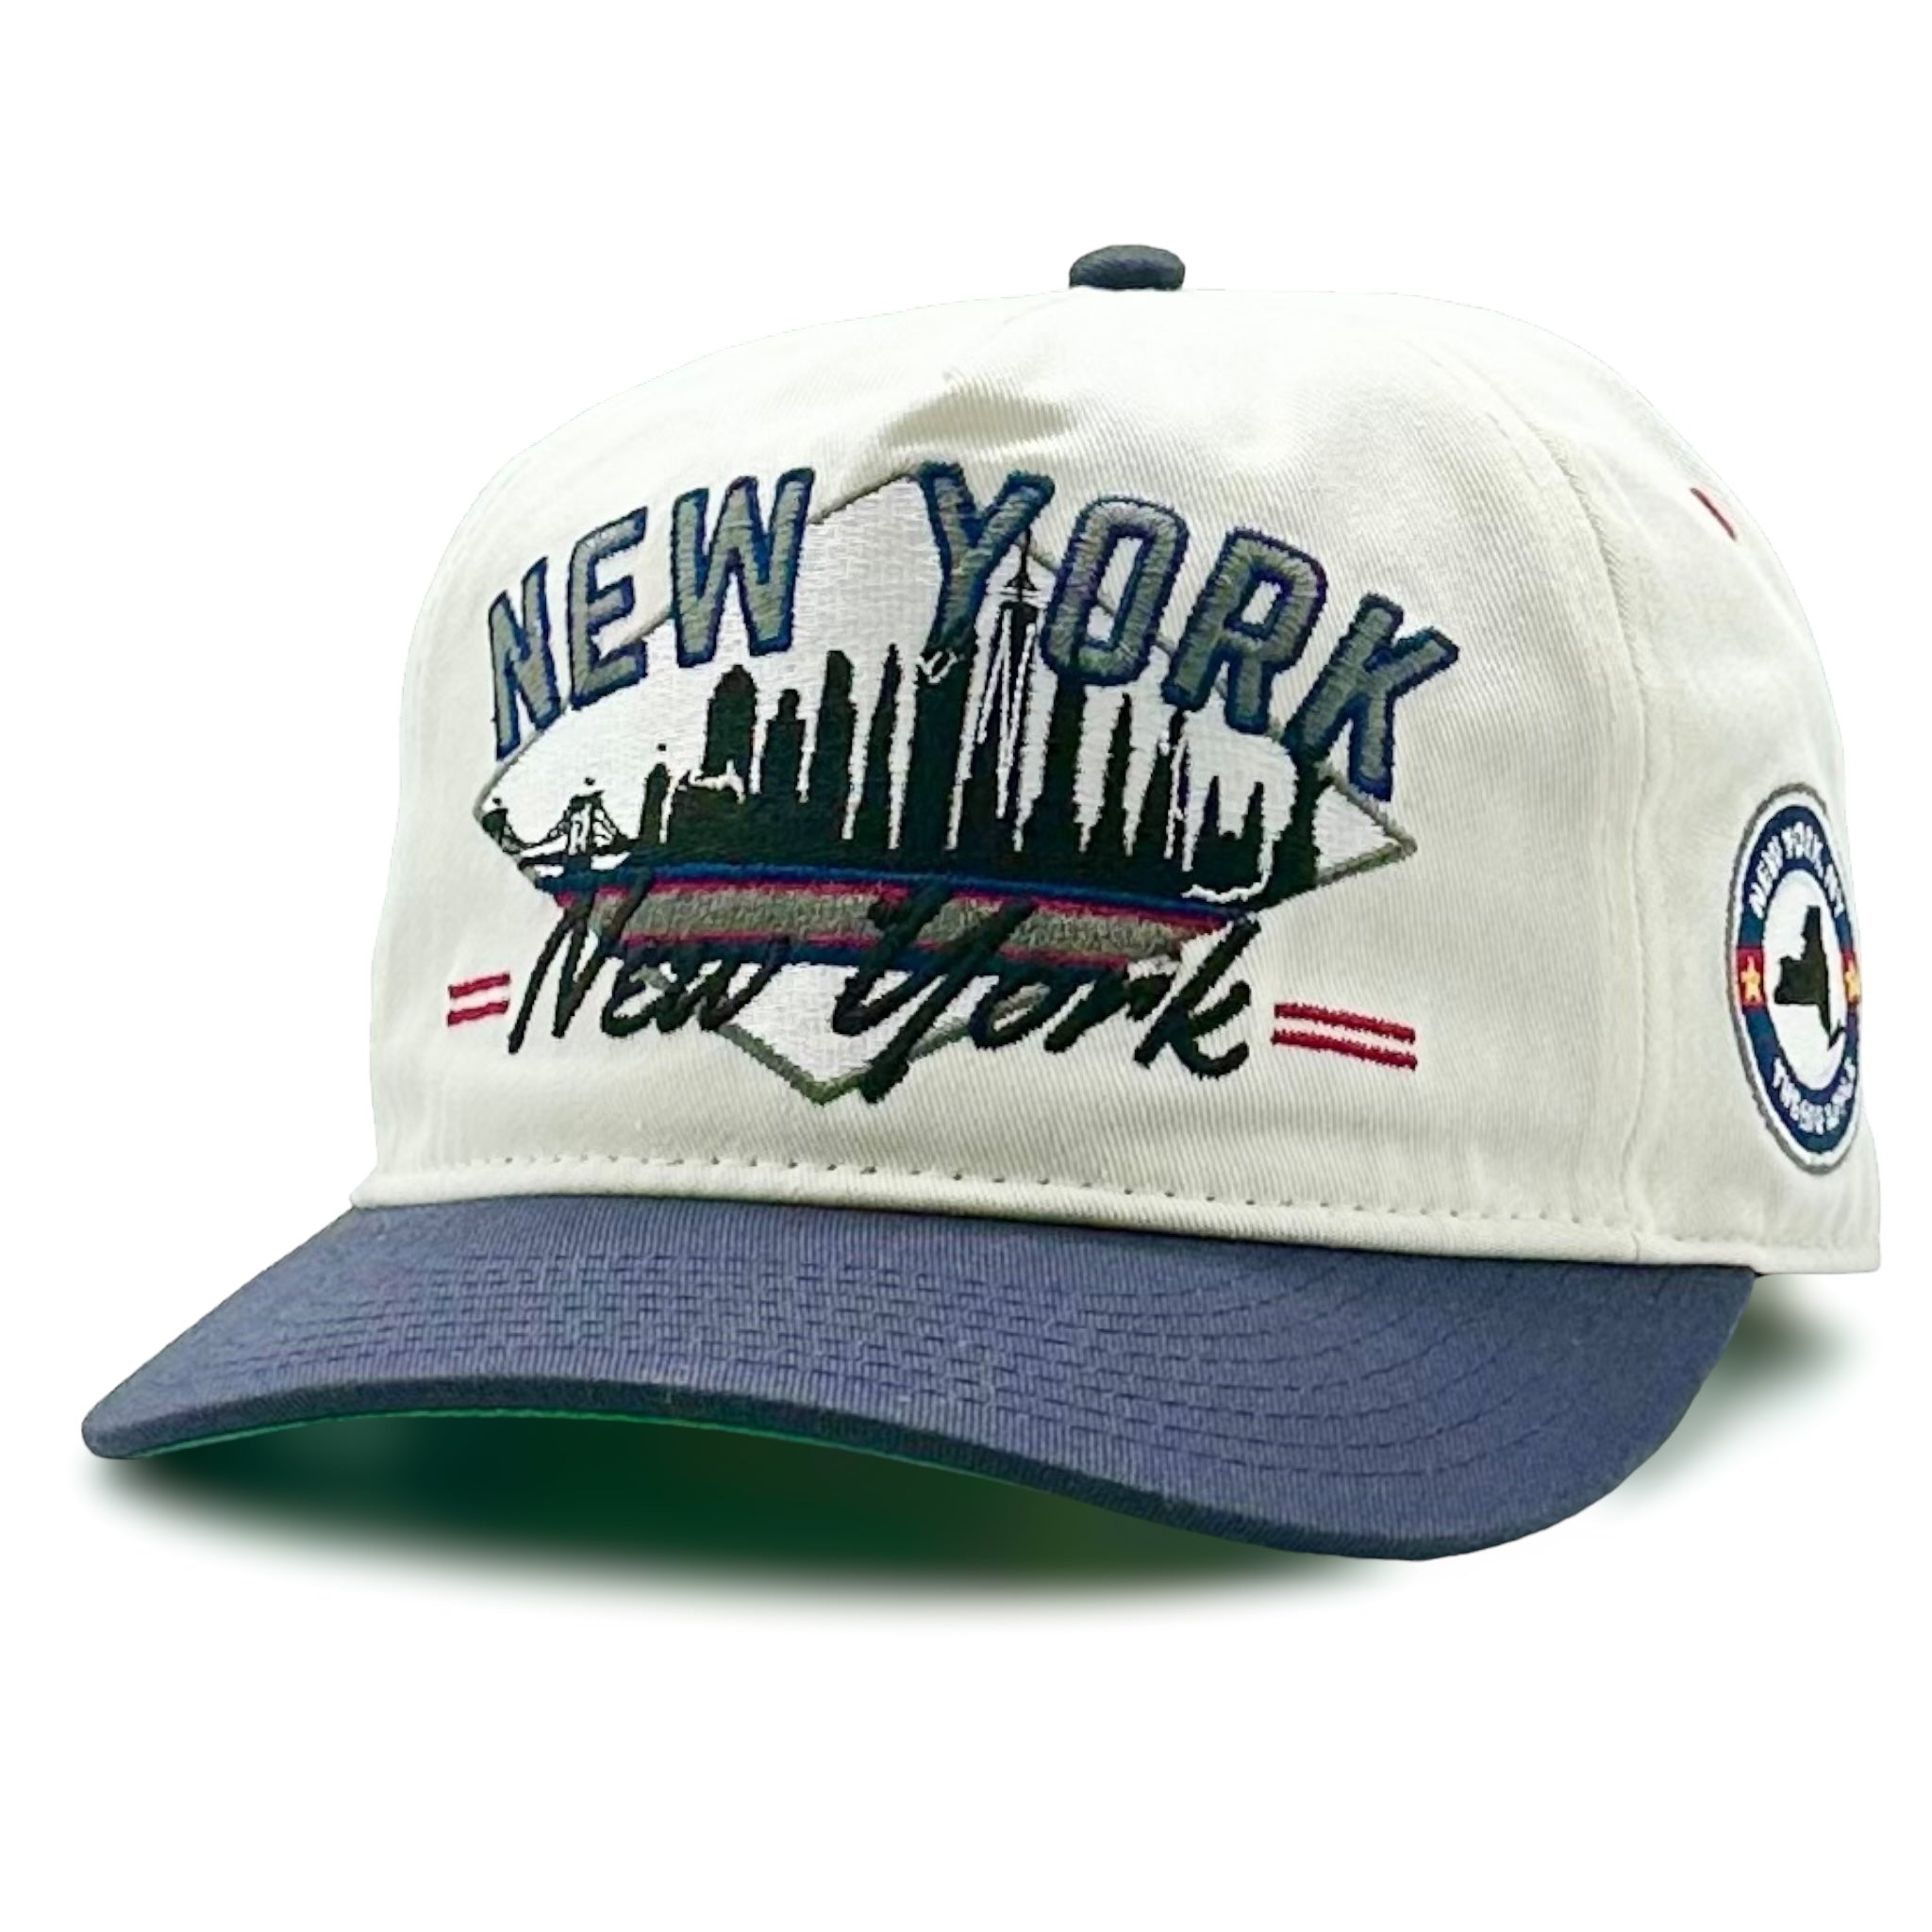 Vintage Style New York Hat | Yankees Colors